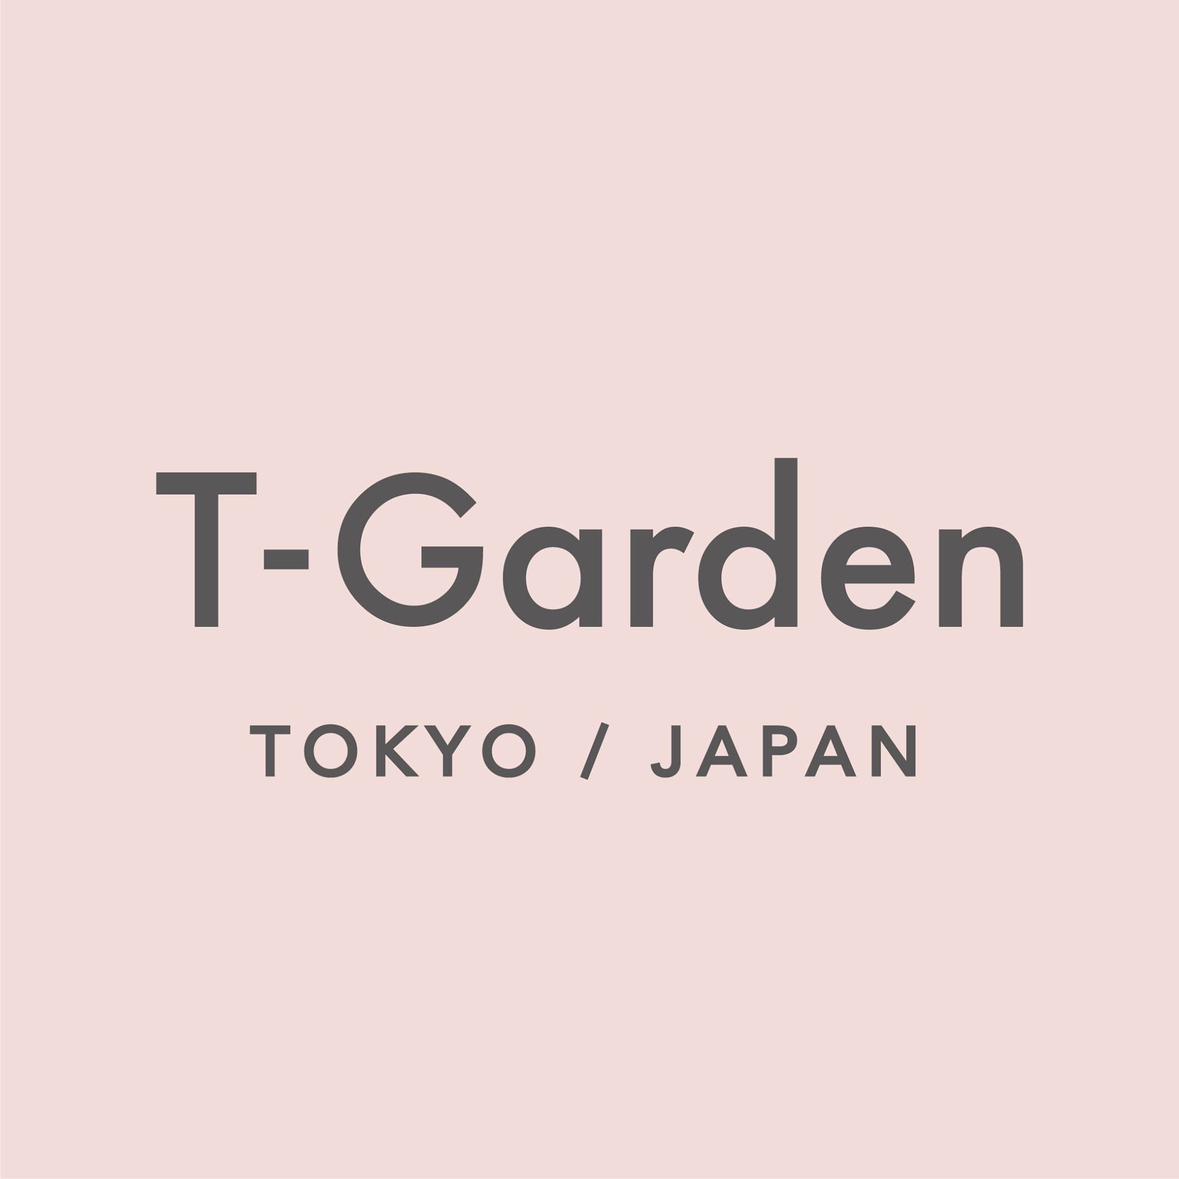 T-Garden SG's images